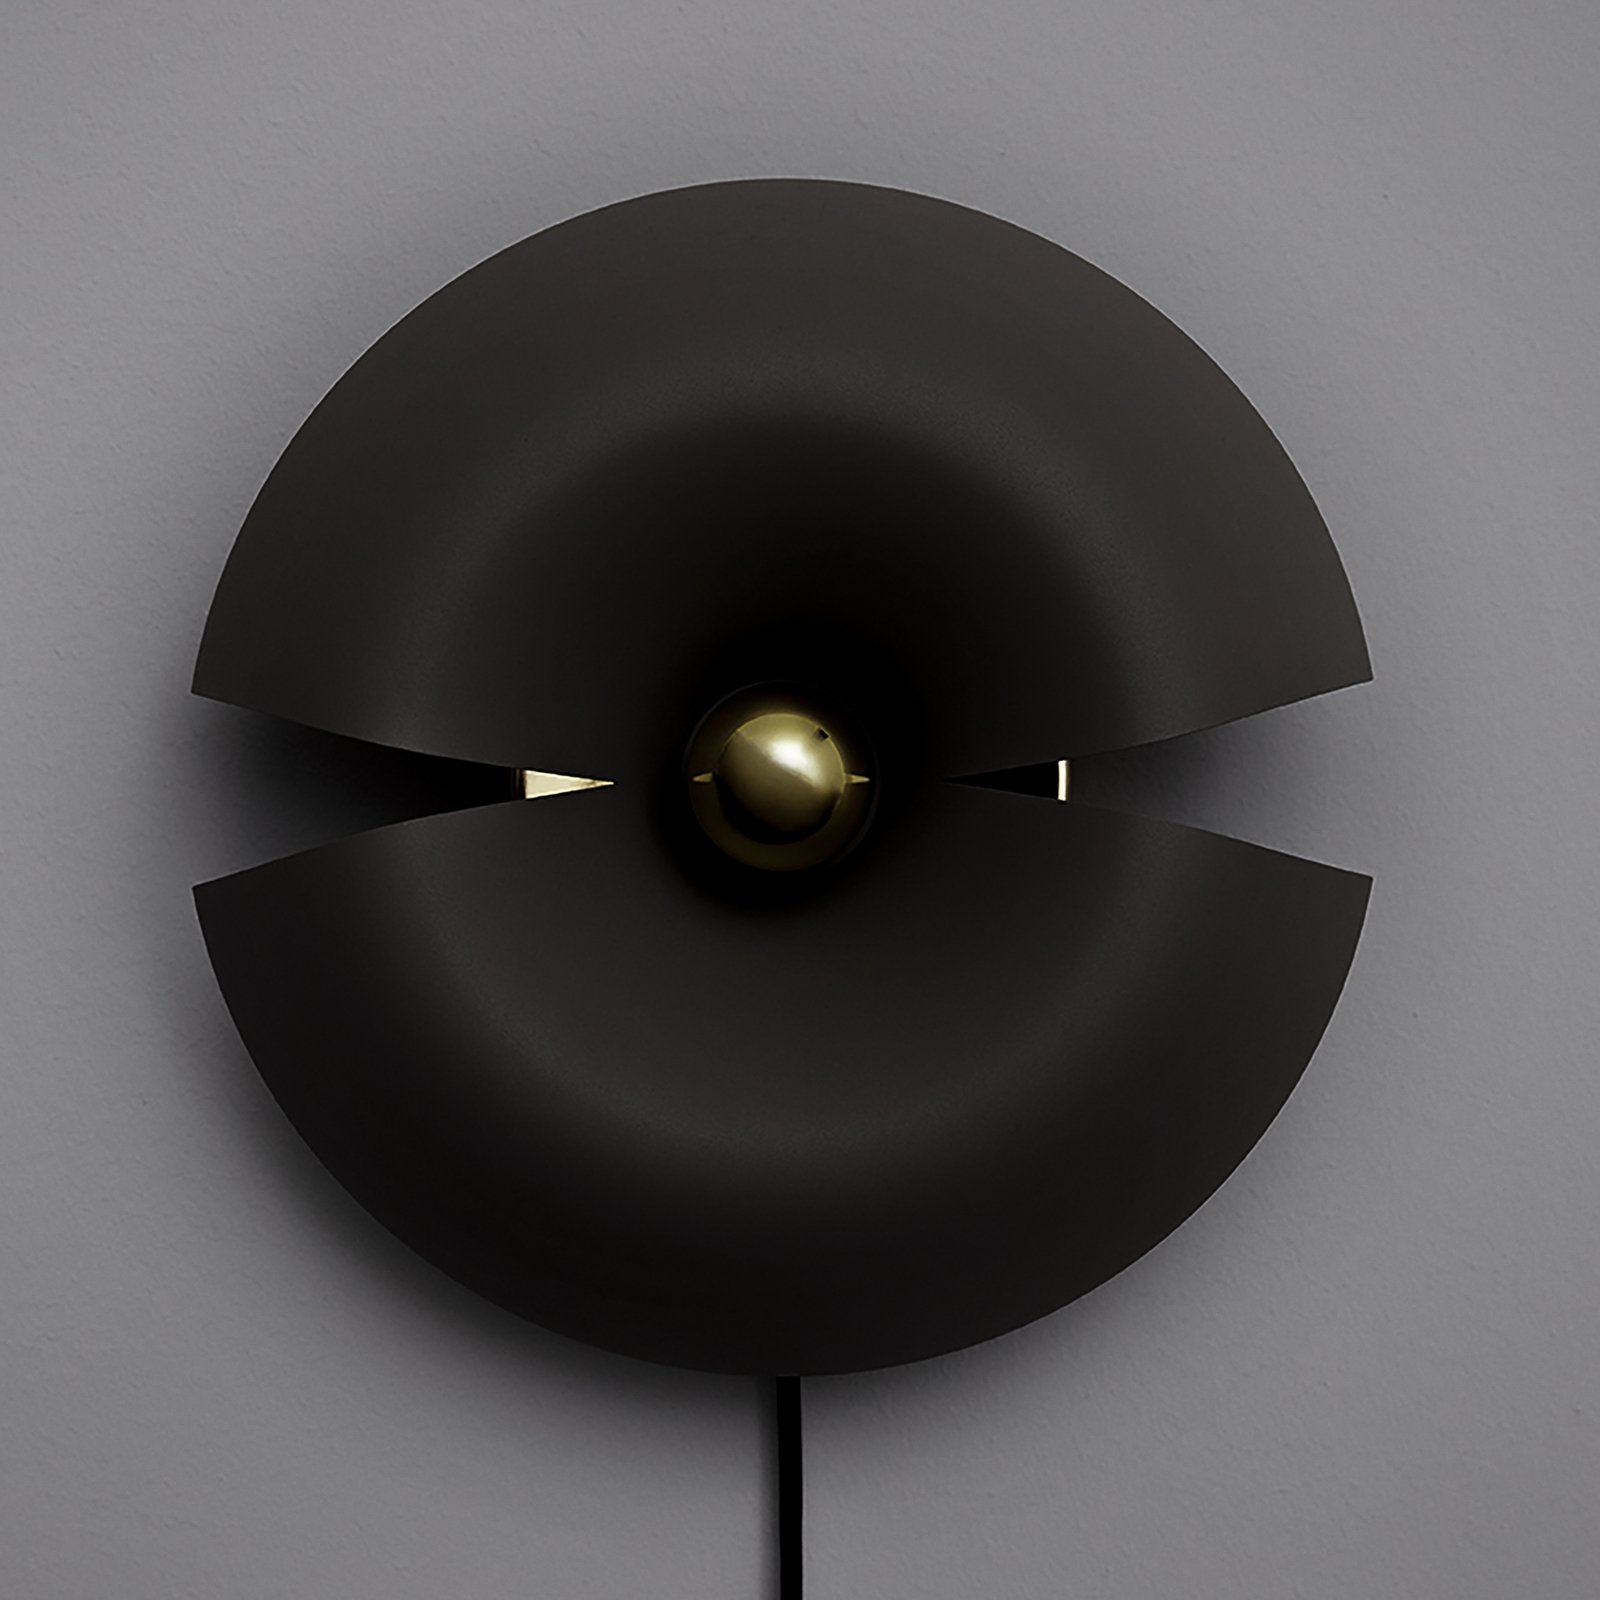 Wandlamp AYTM Cycnus, zwart, Ø 30 cm, stekker, aluminium, E27